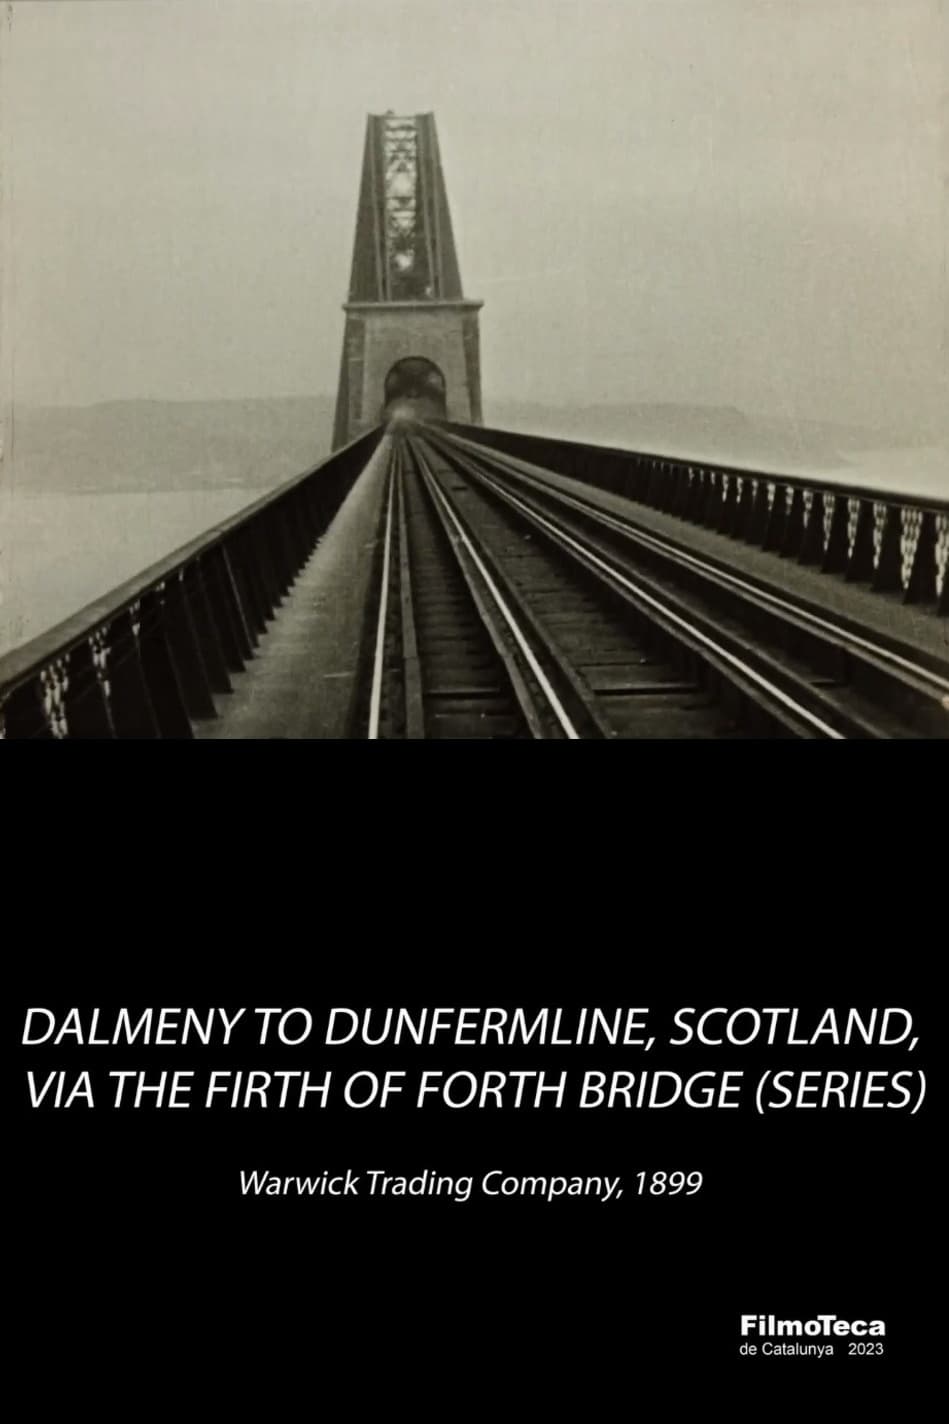 Dalmeny to Dunfermline, Scotland Via the Firth of Forth Bridge